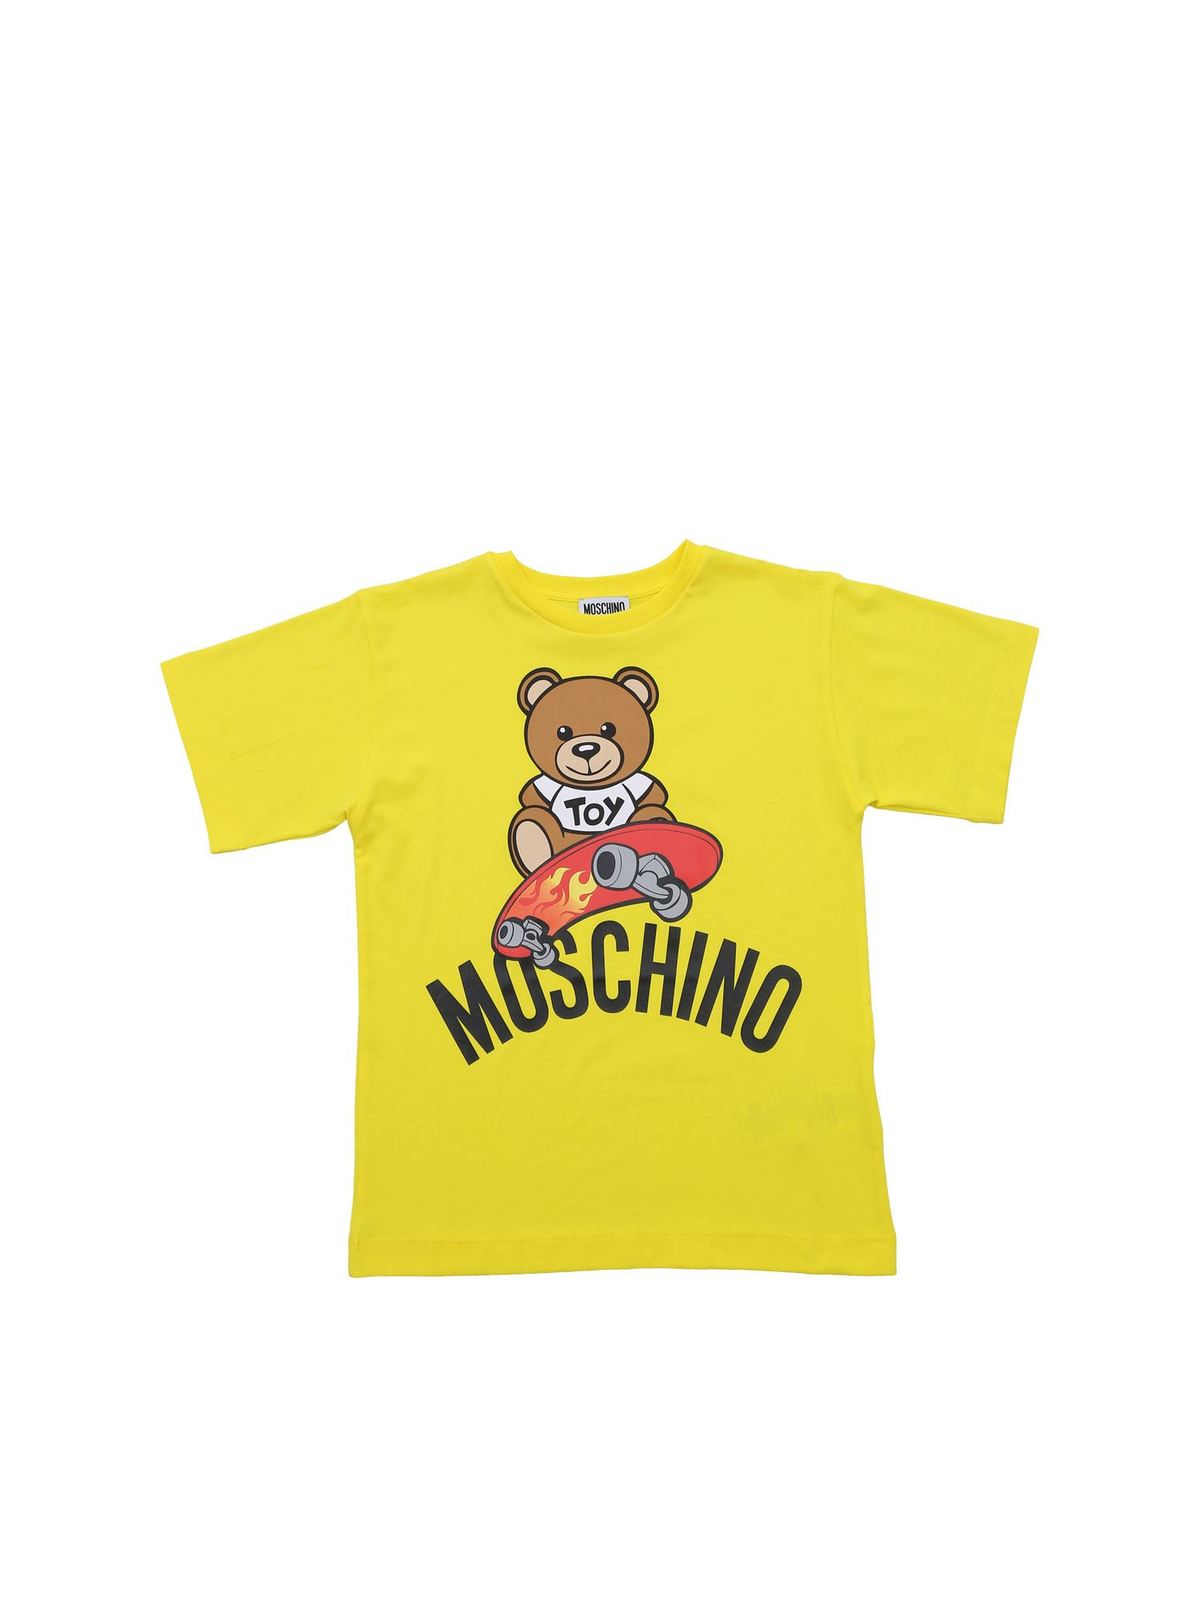 moschino kids tshirts